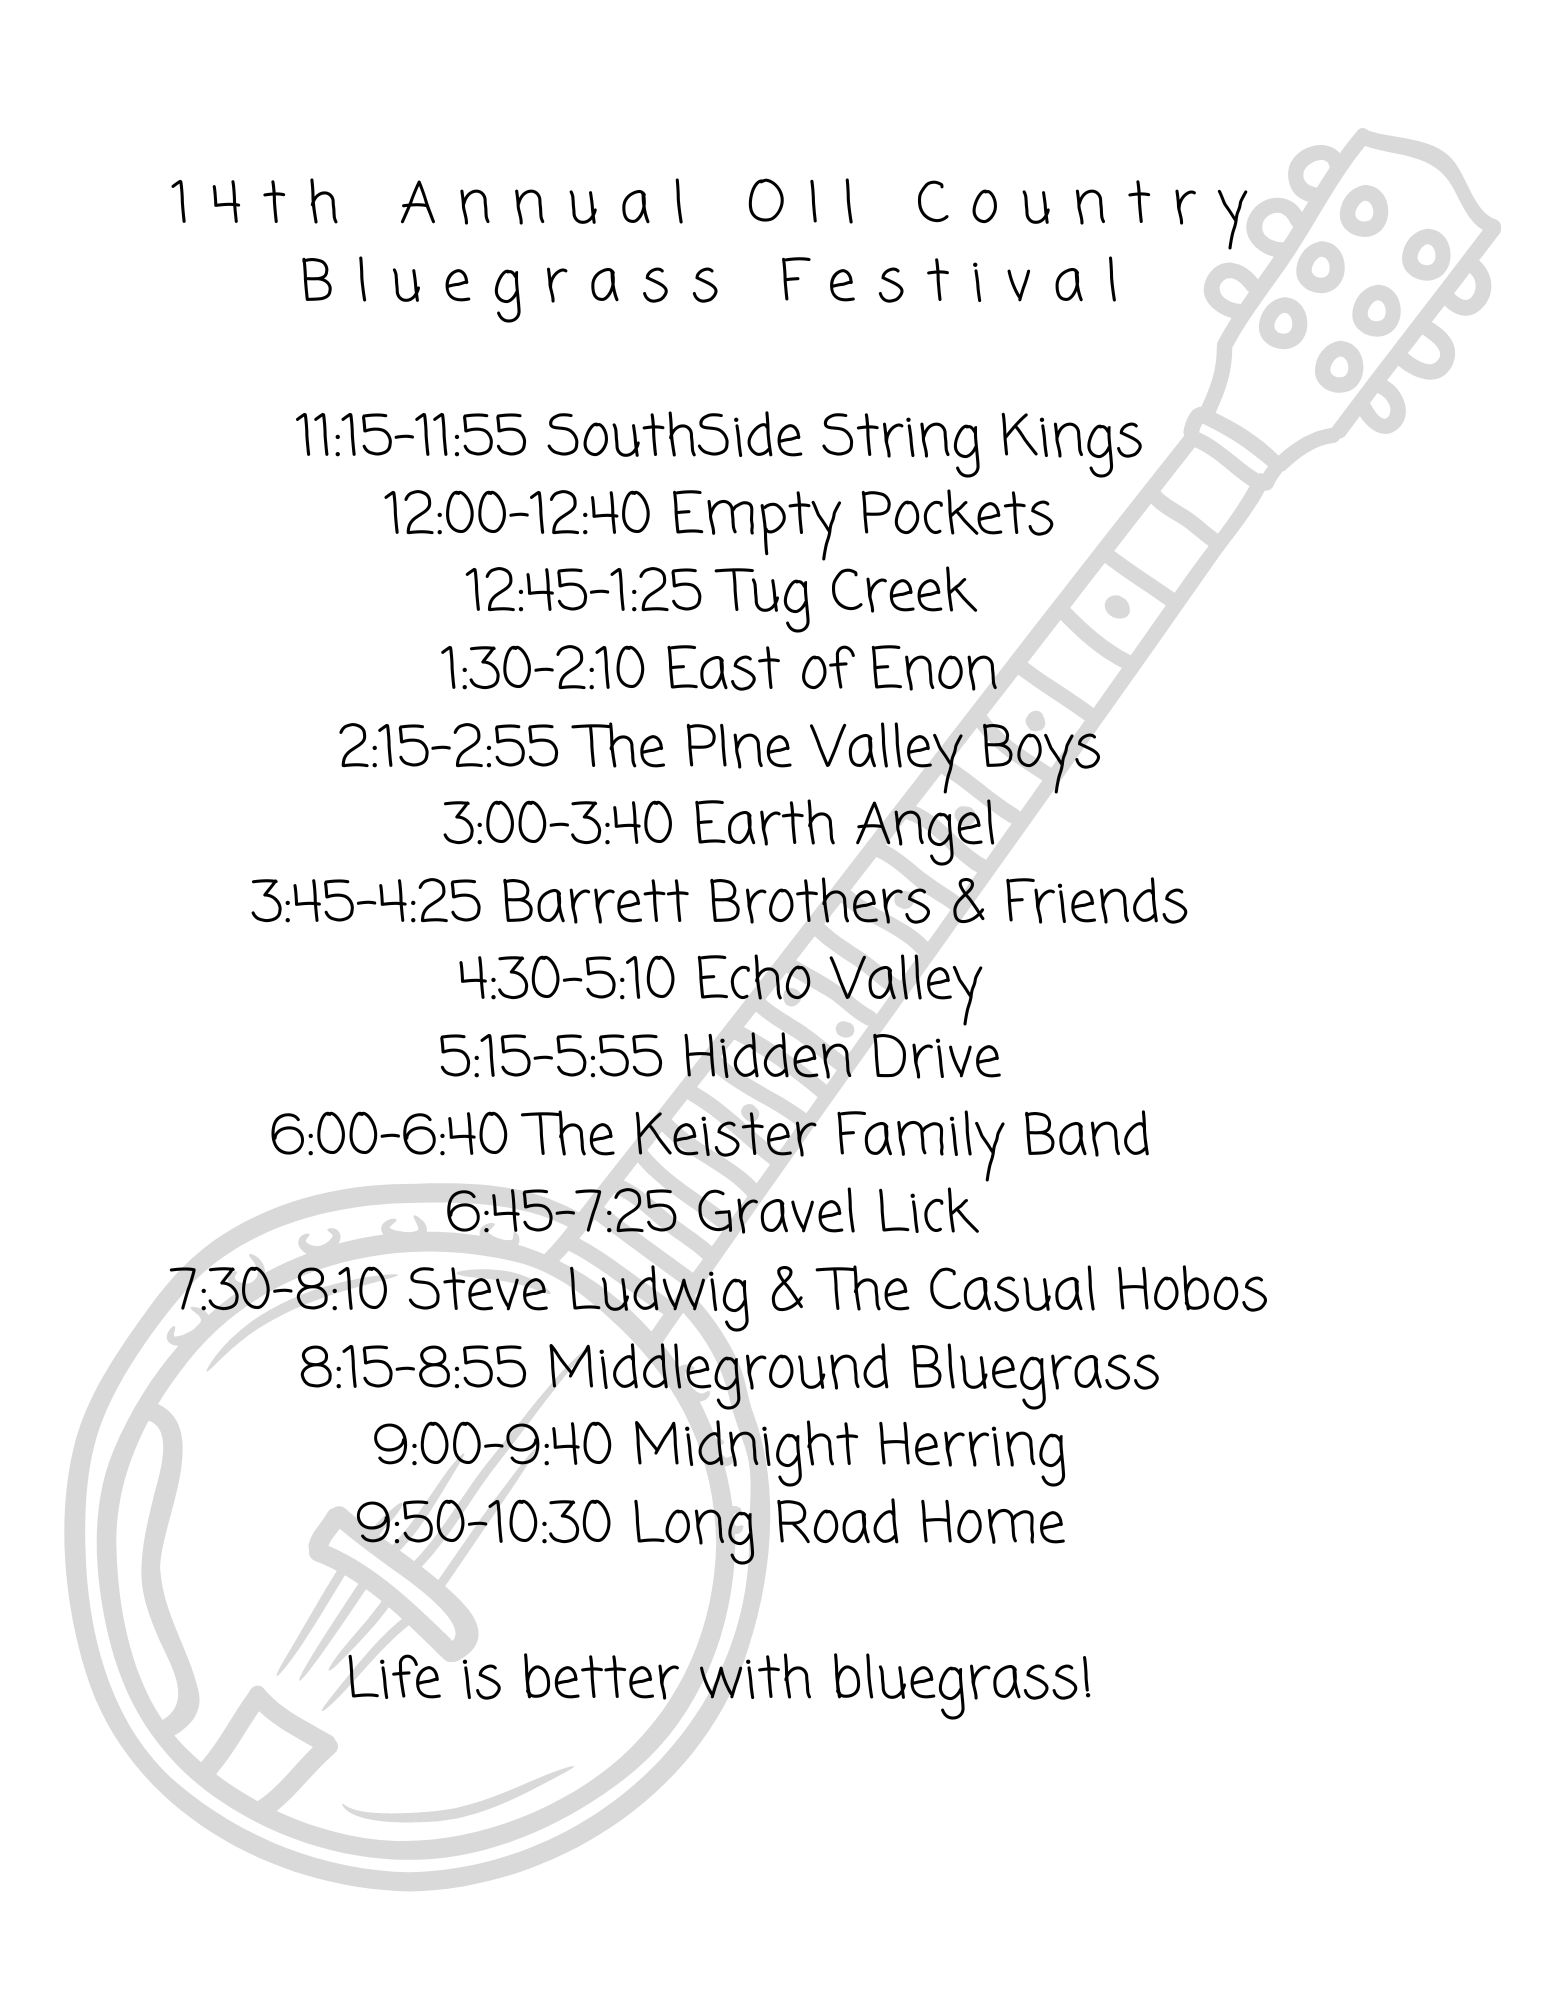 Oil Country Bluegrass Festival